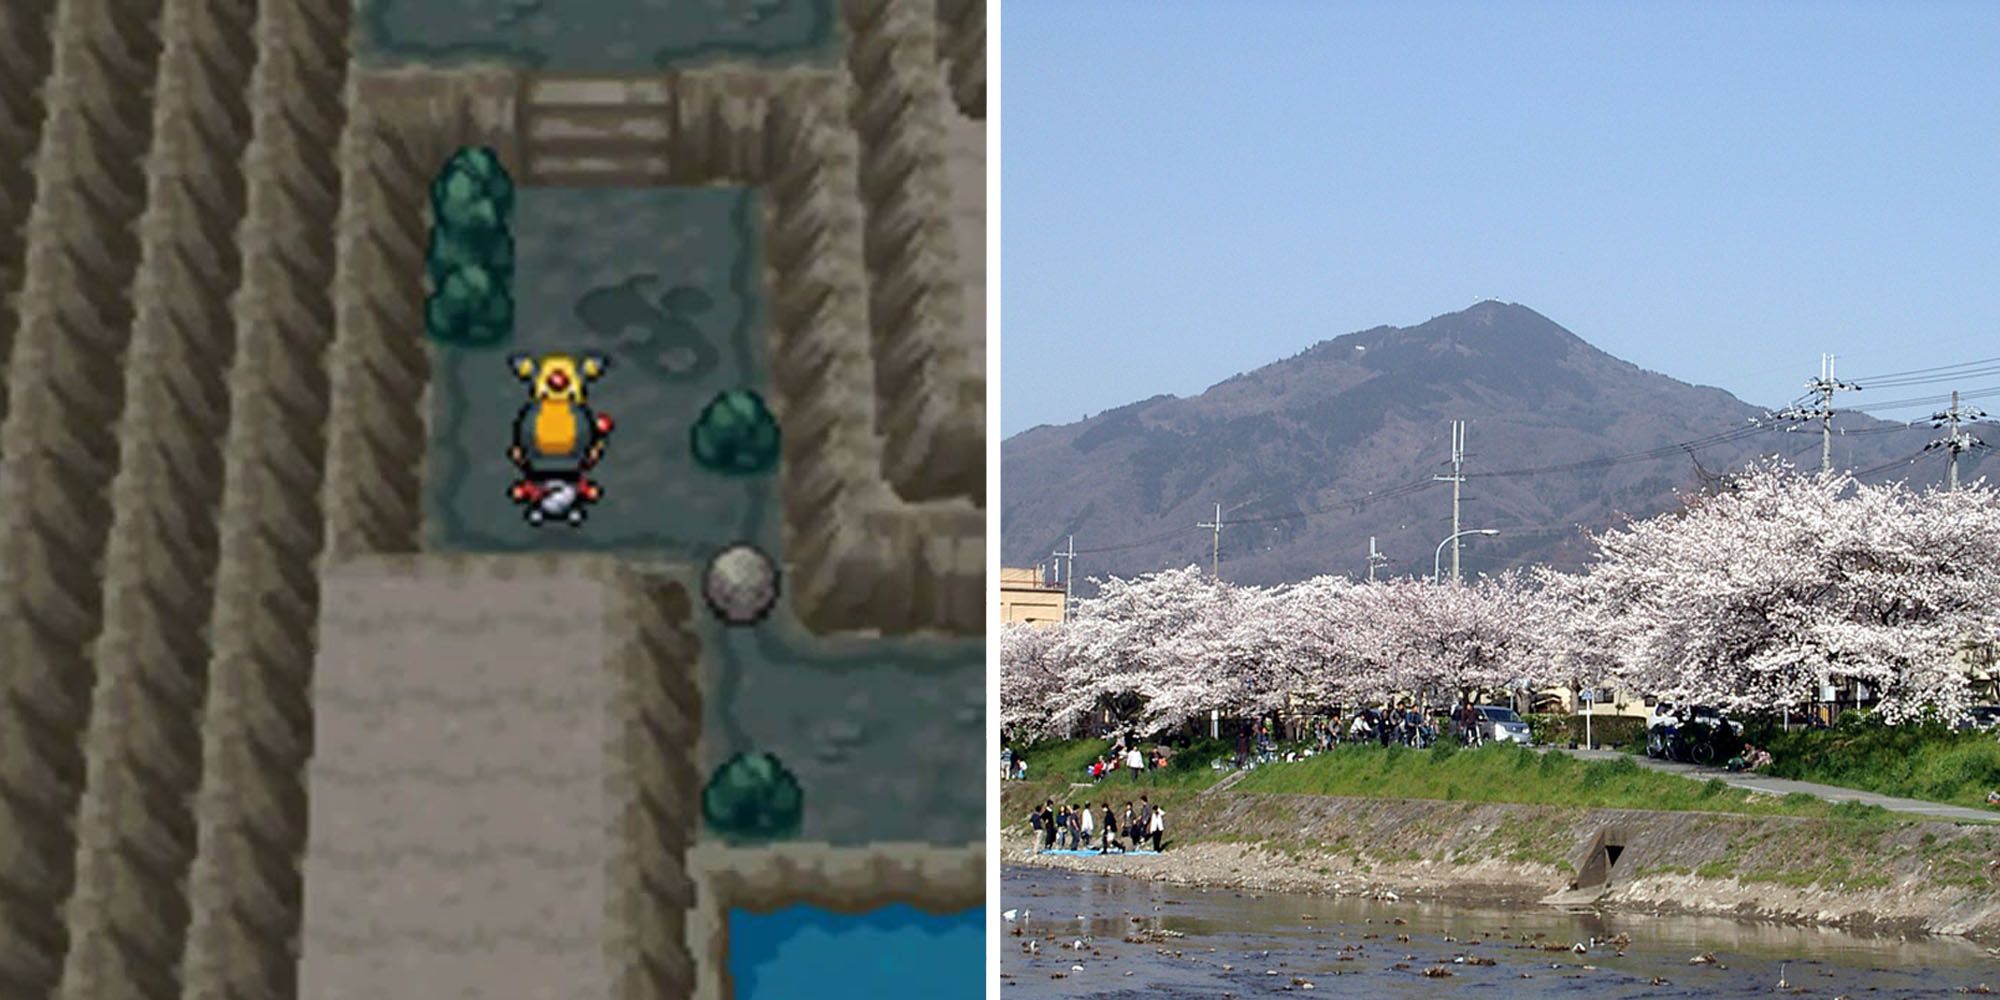 Comparison between Mt Mortar and Mt Hiei